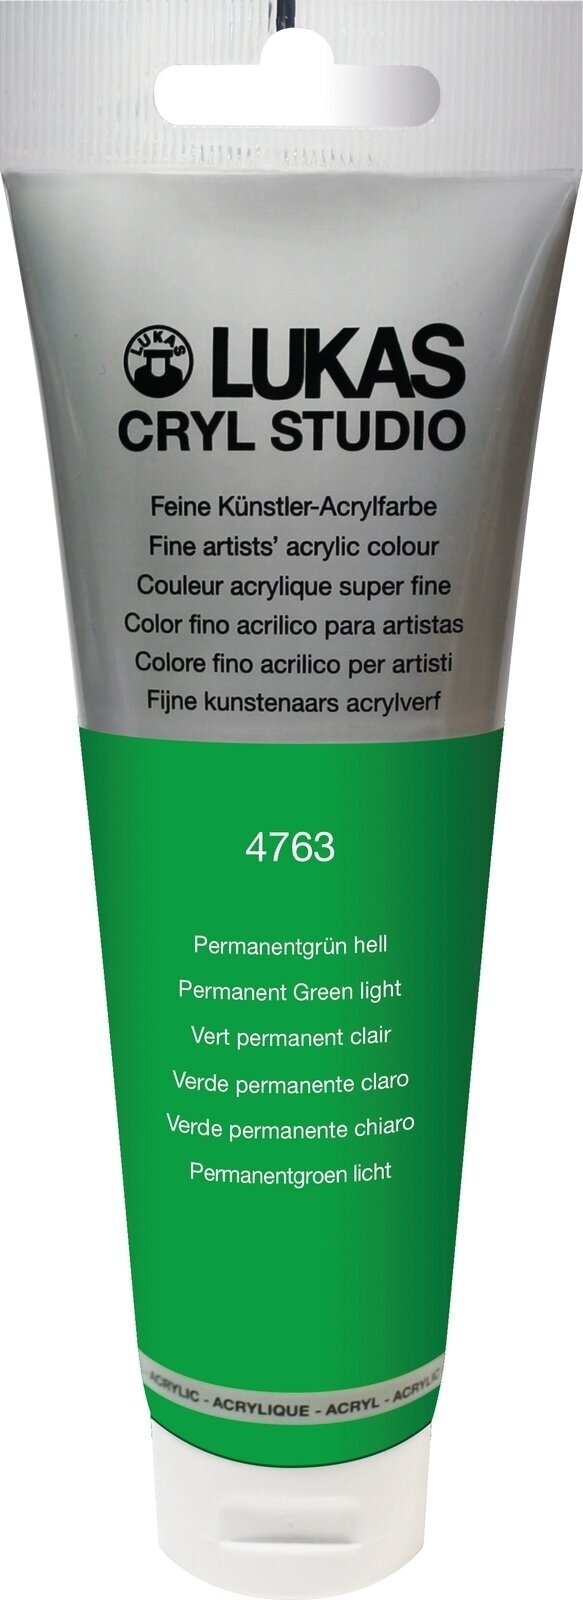 Acrylic Paint Lukas Cryl Studio Acrylic Paint Plastic Tube Acrylic Paint Permanent Green Light 125 ml 1 pc